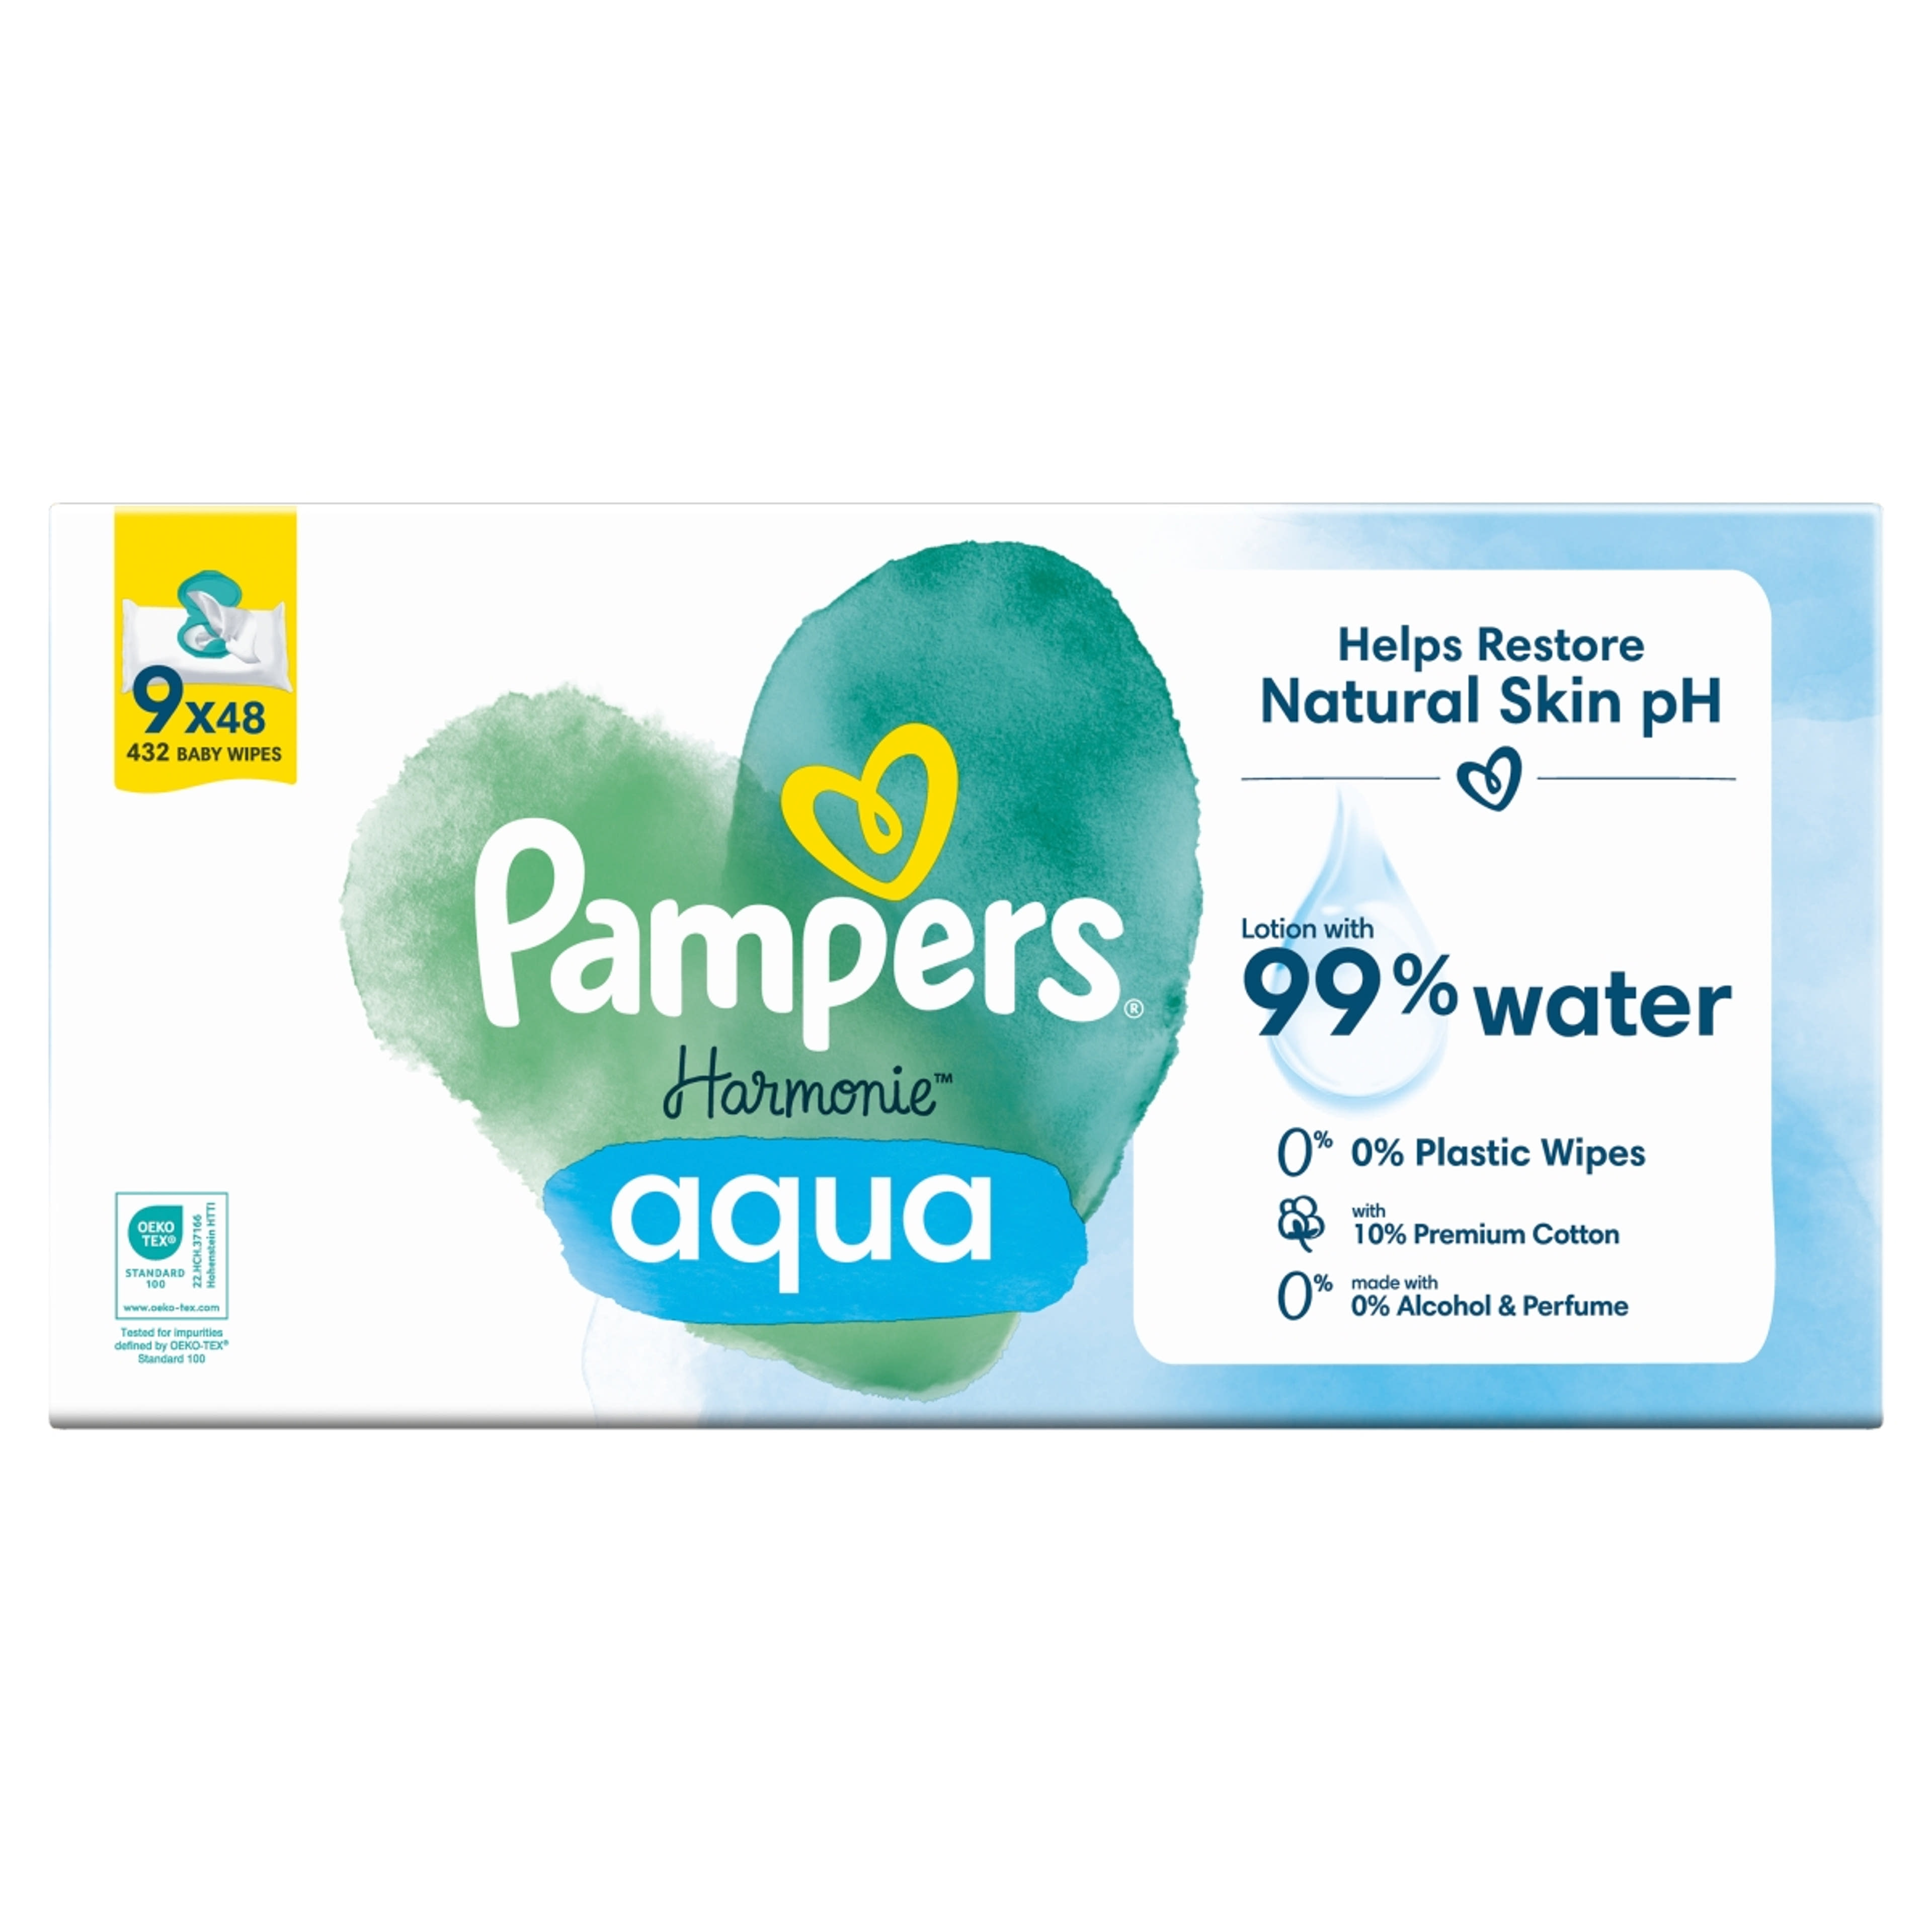 Pampers Harmonie Aqua nedves törlőkendő 9x 48 db - 432 db